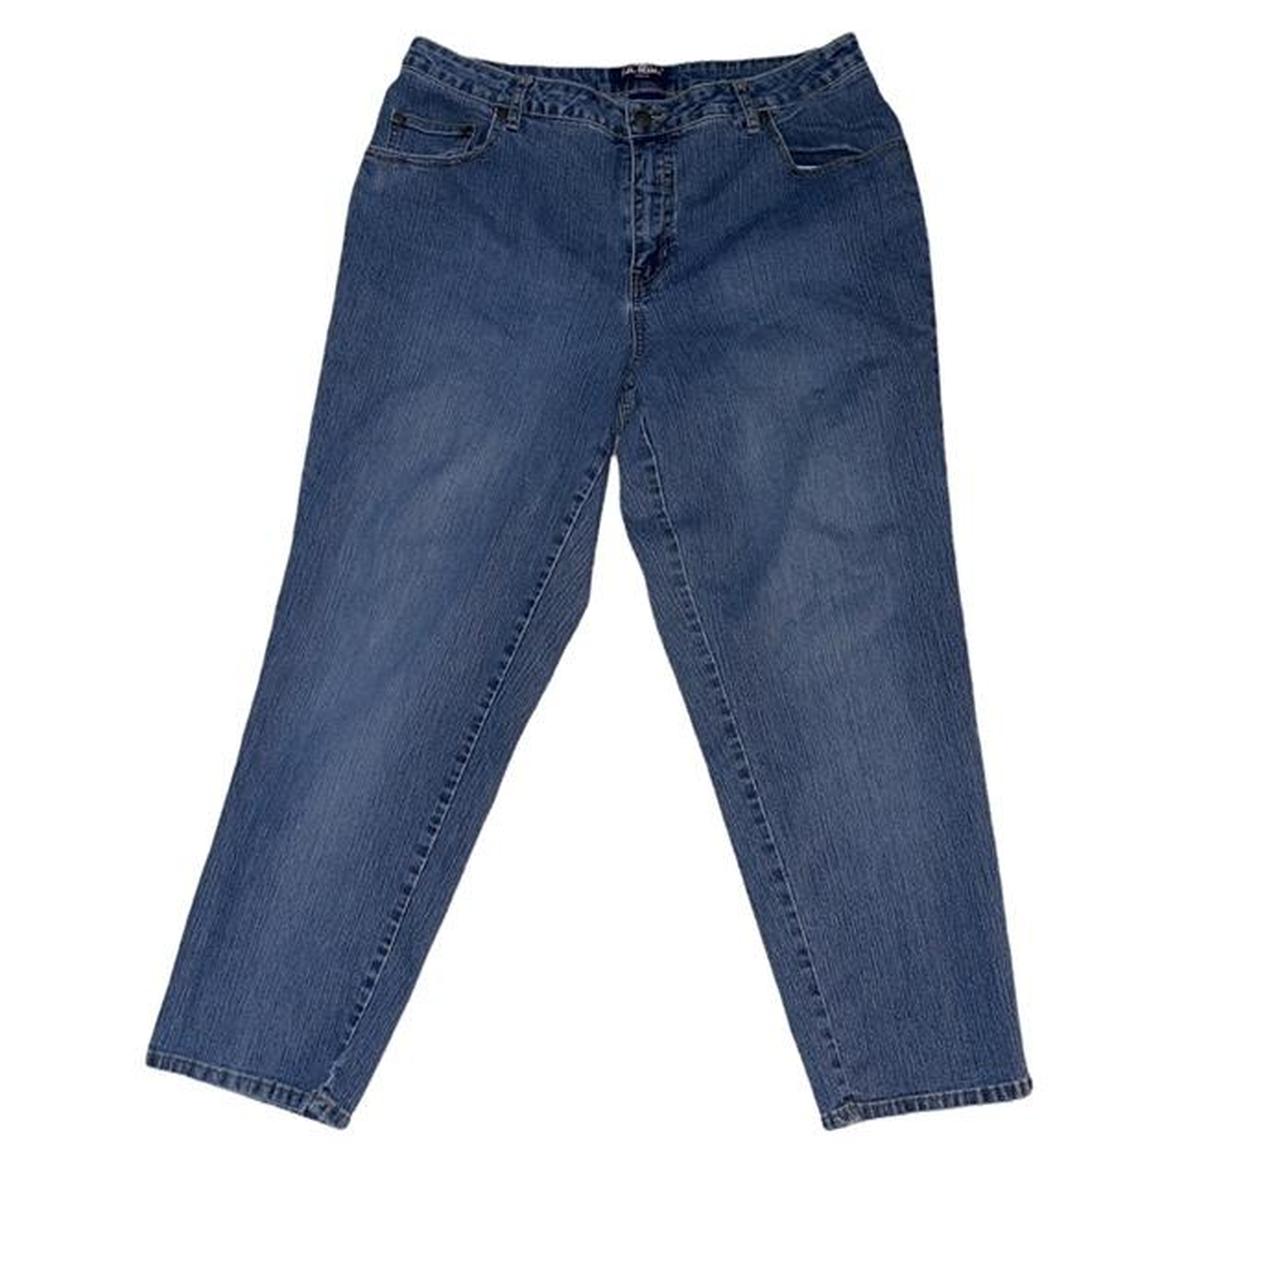 Comfy jeans size 16/18 - Depop